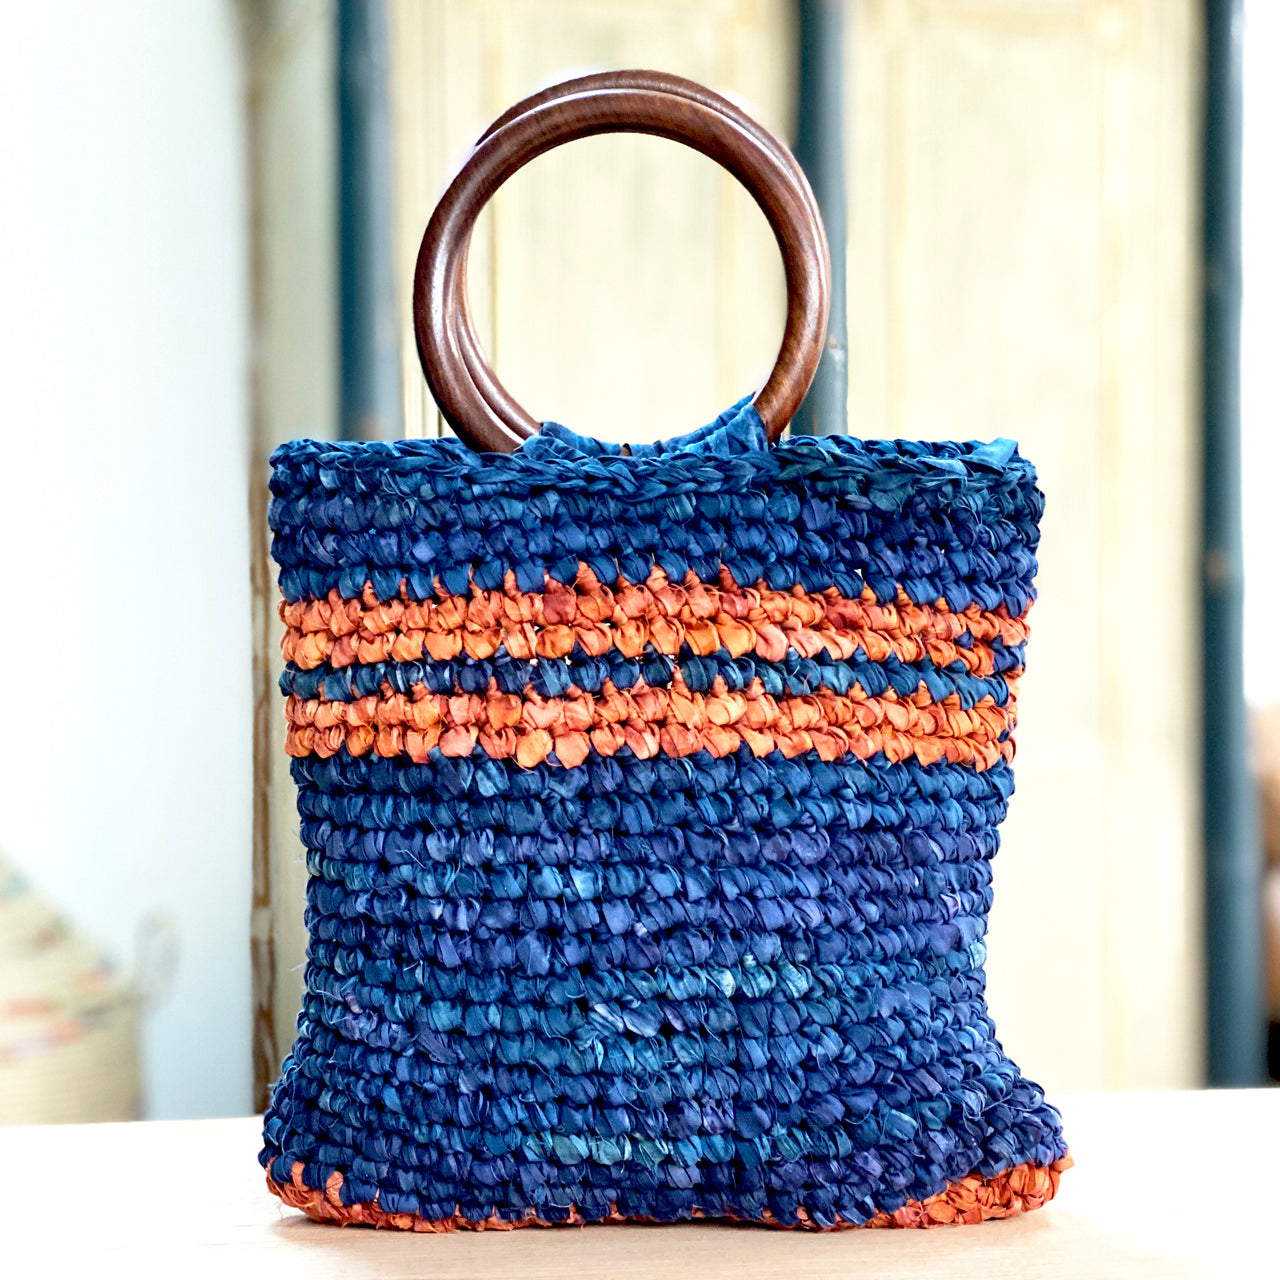 I Only Want a Little Bag: Crochet pattern | Ribblr